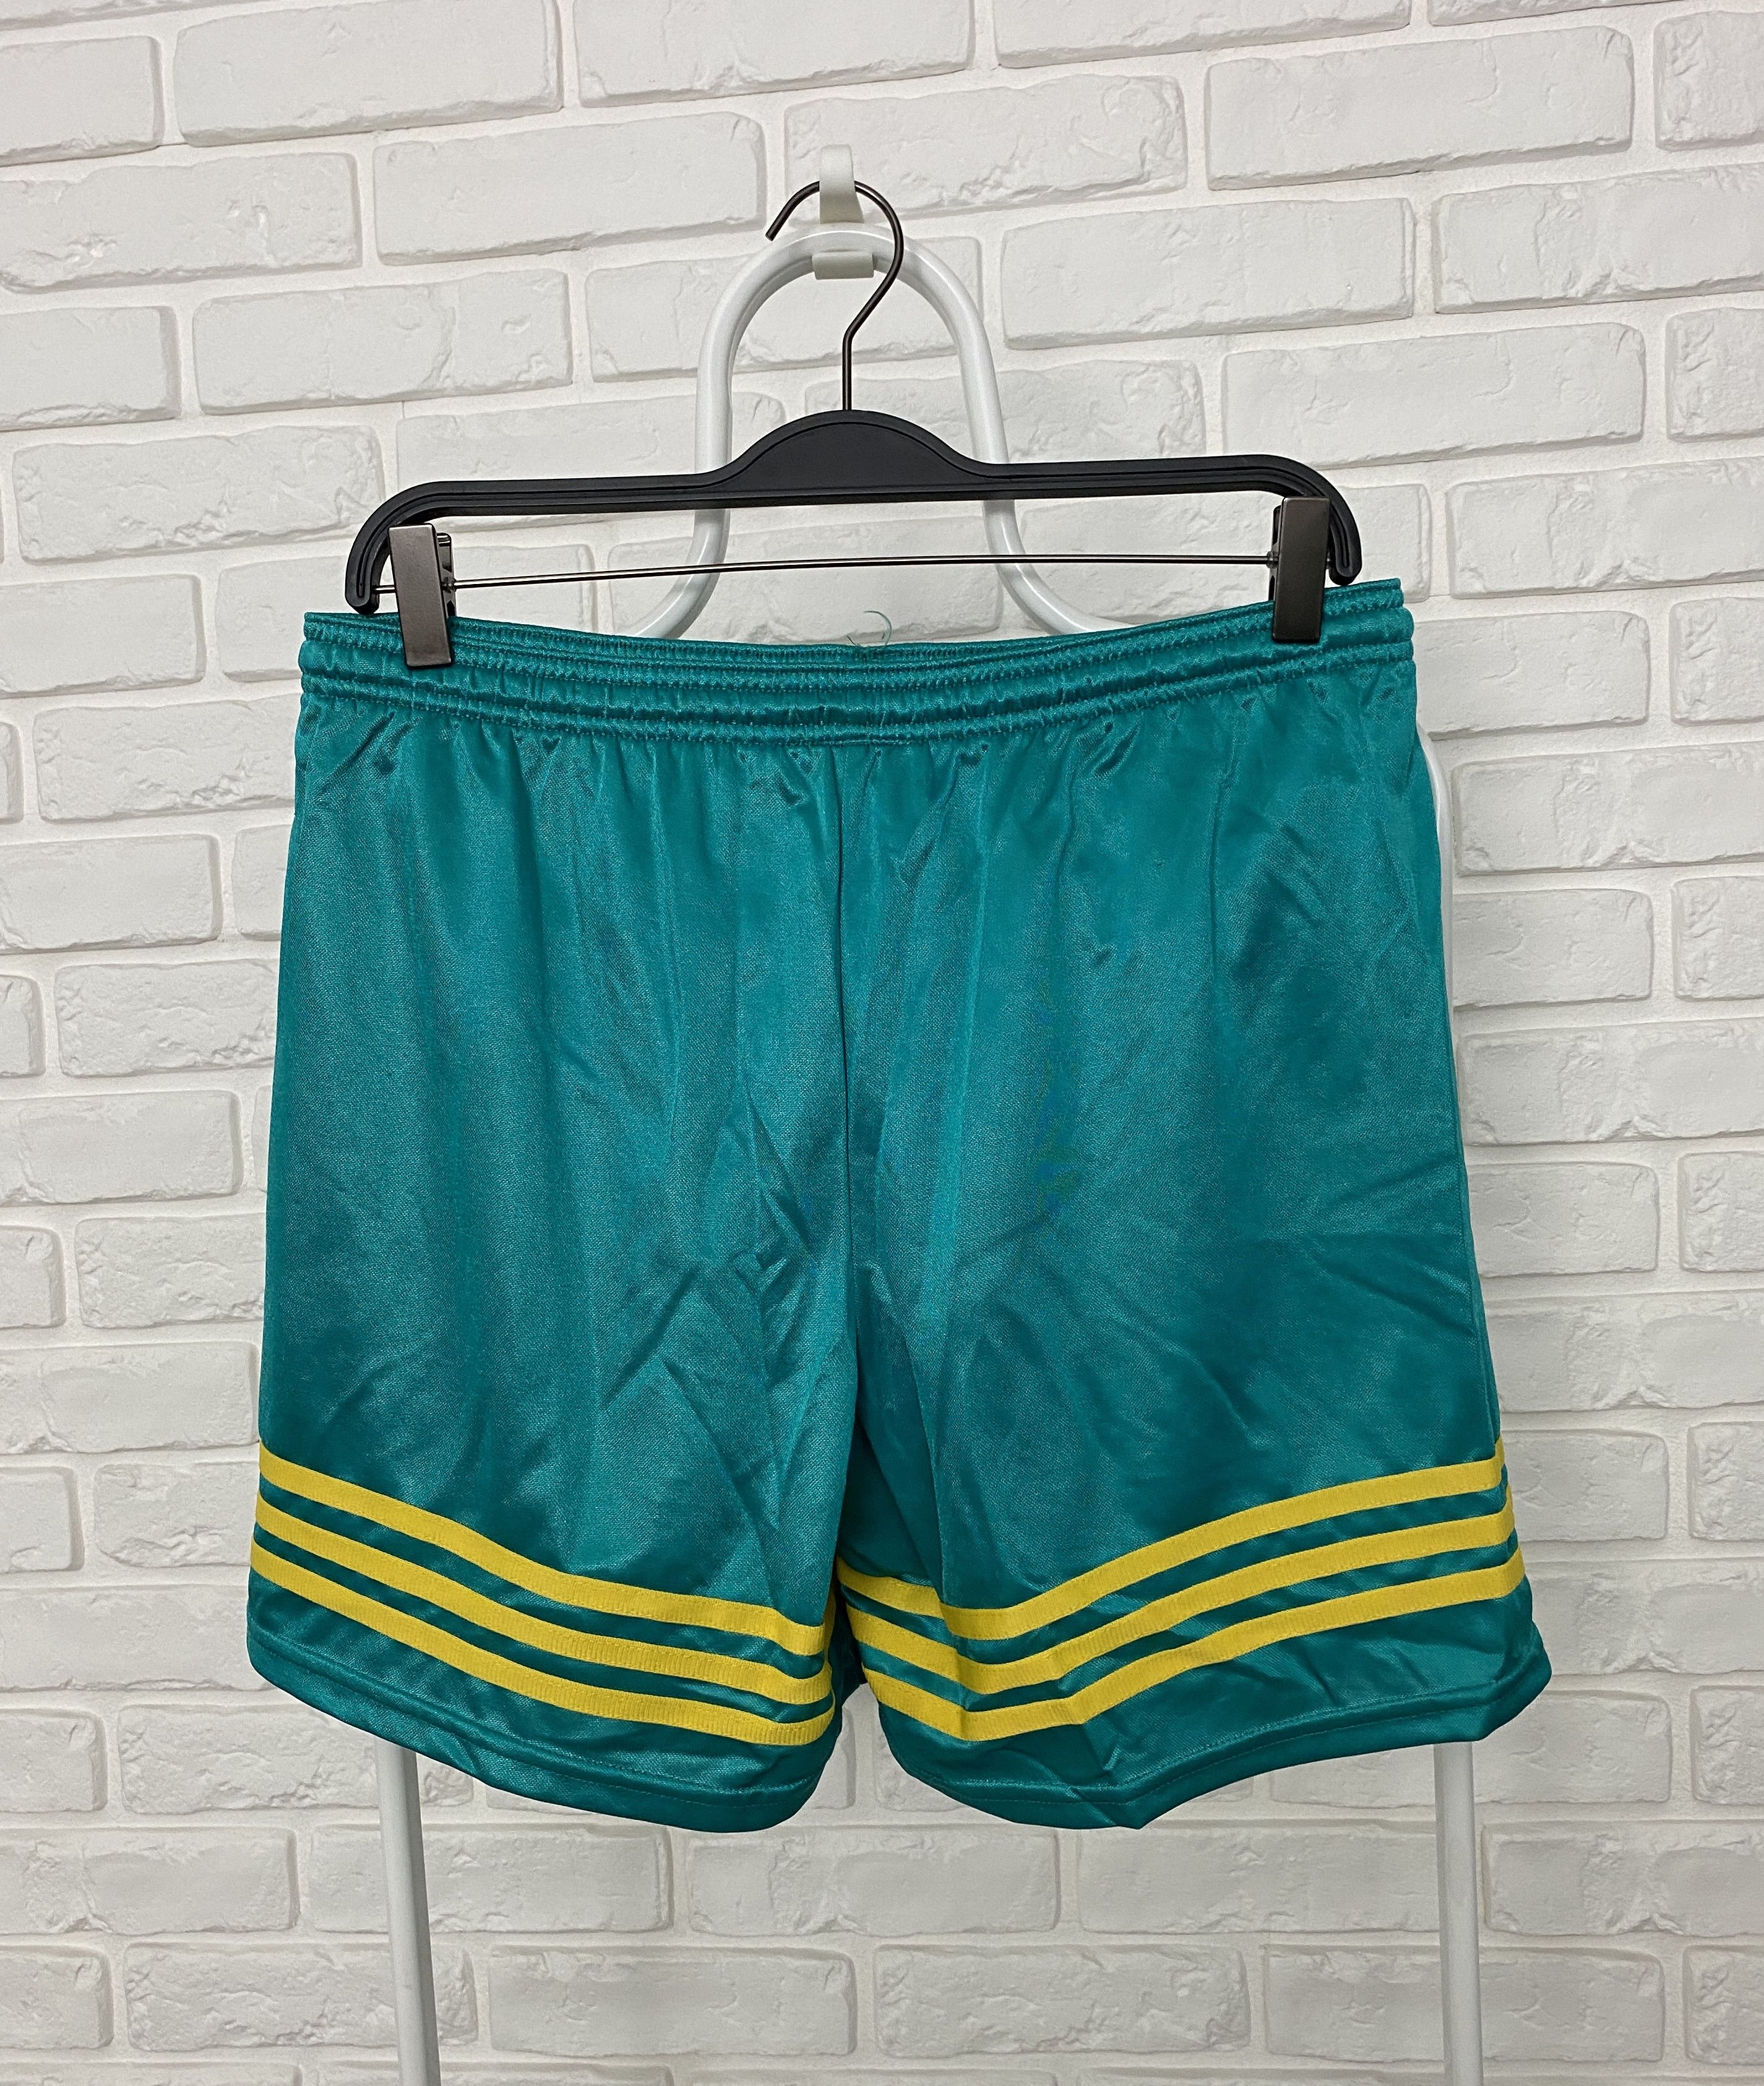 Adidas Retro Adidas 90s Nylon Shorts Soccer Size M Small Logo Size US 32 / EU 48 - 3 Thumbnail